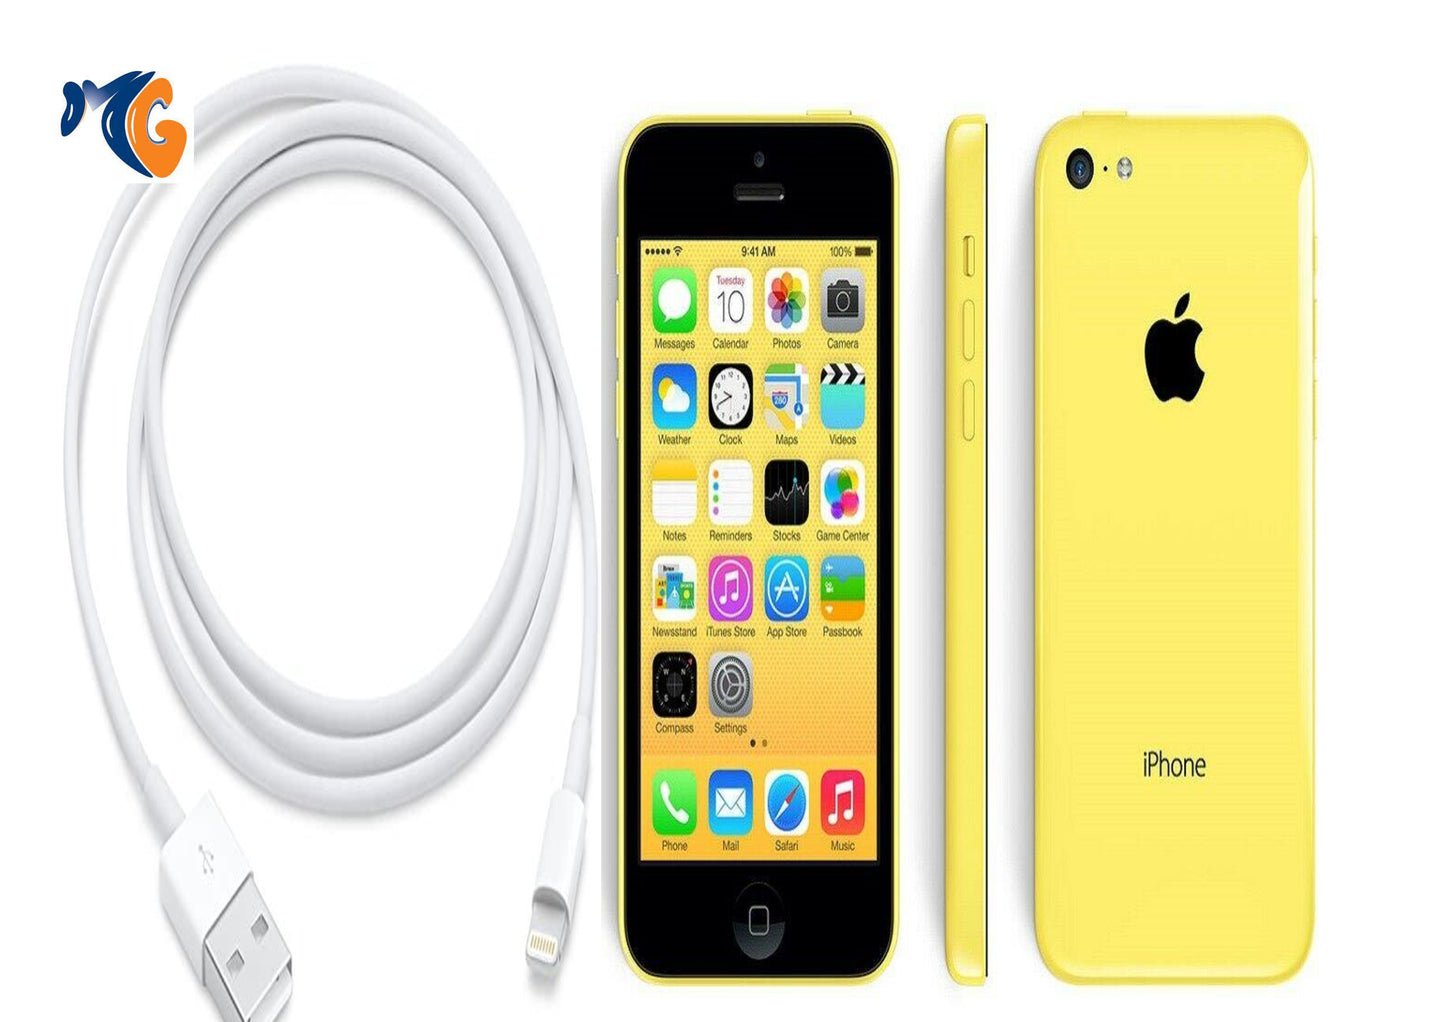 Iphone 5C 16gB (yellow) unlocked with USB cable - saynama